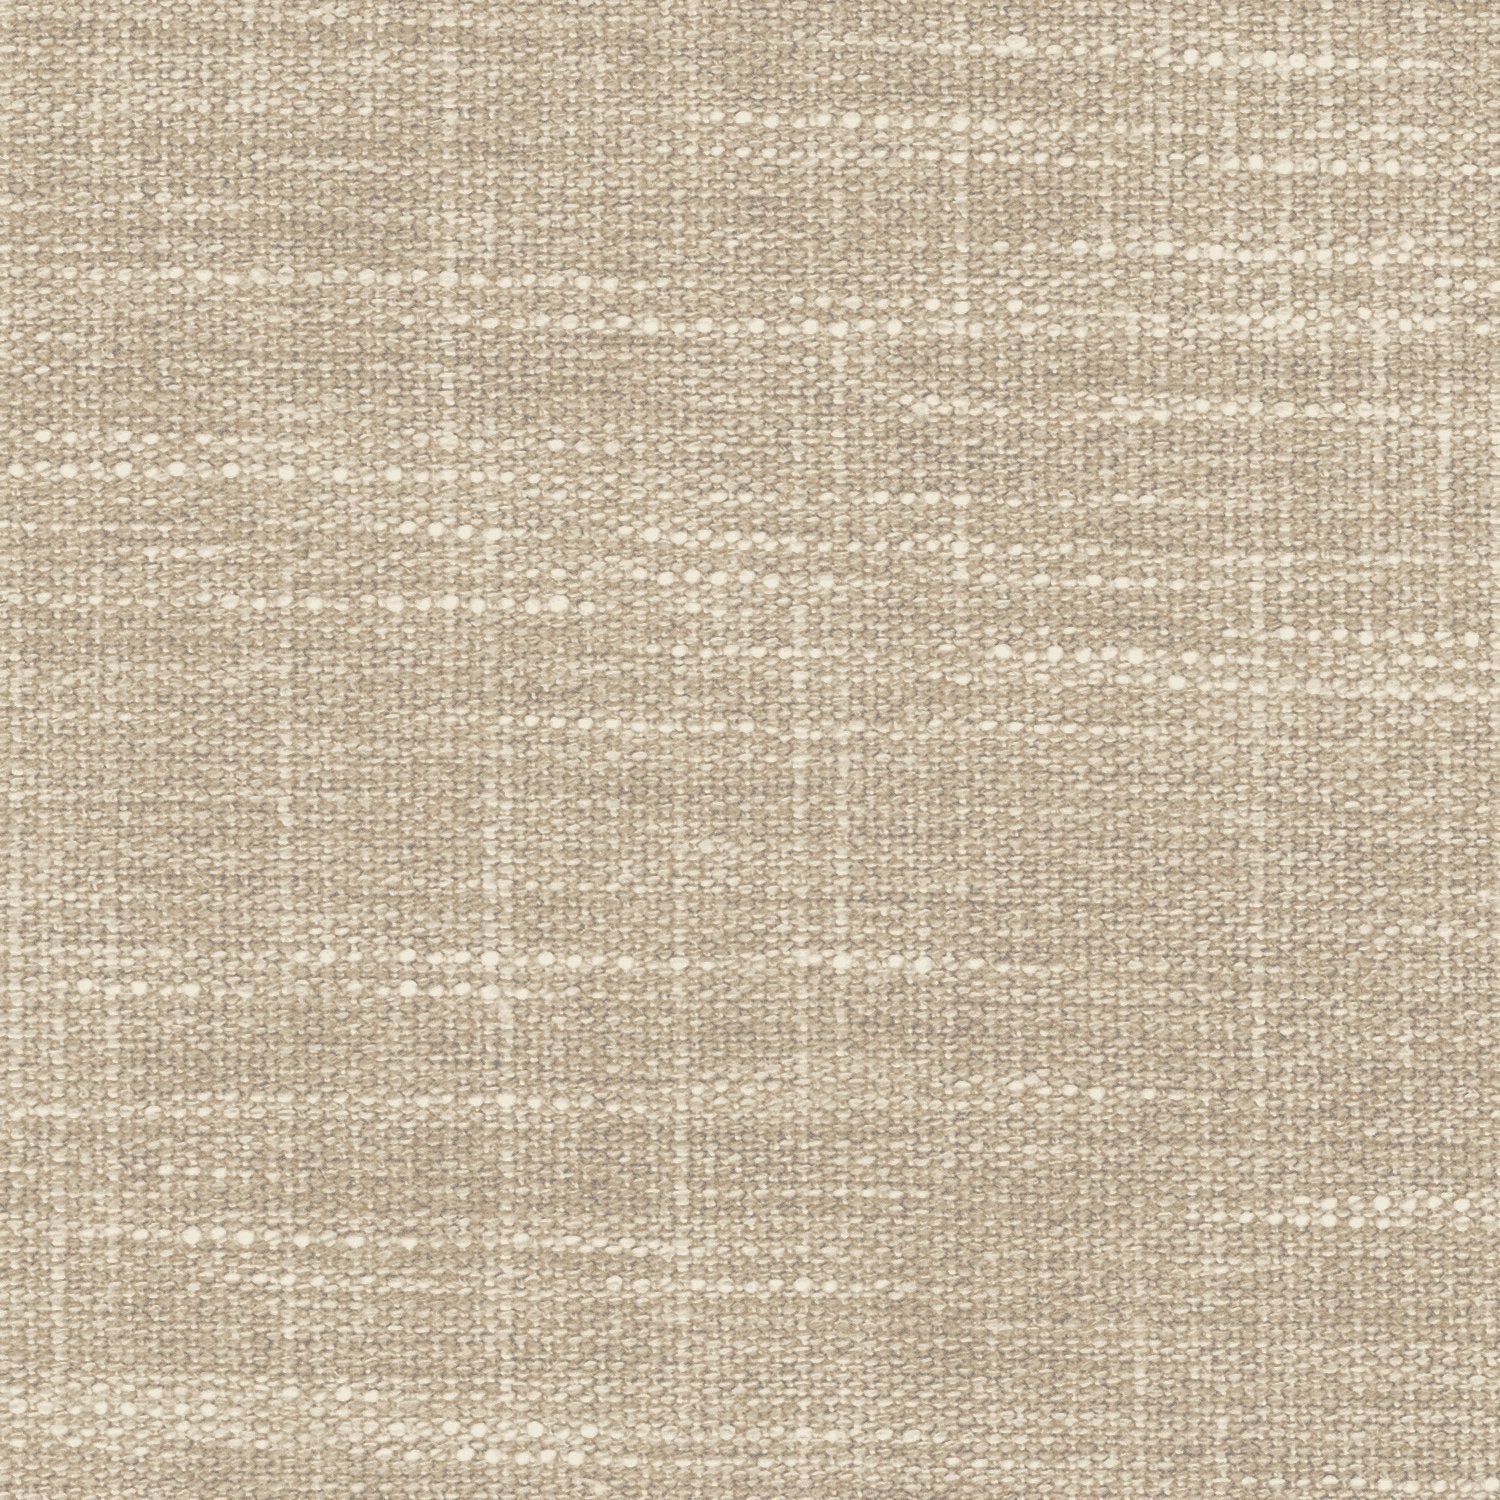 Kaia Linen Burlap Tweed Textured Print